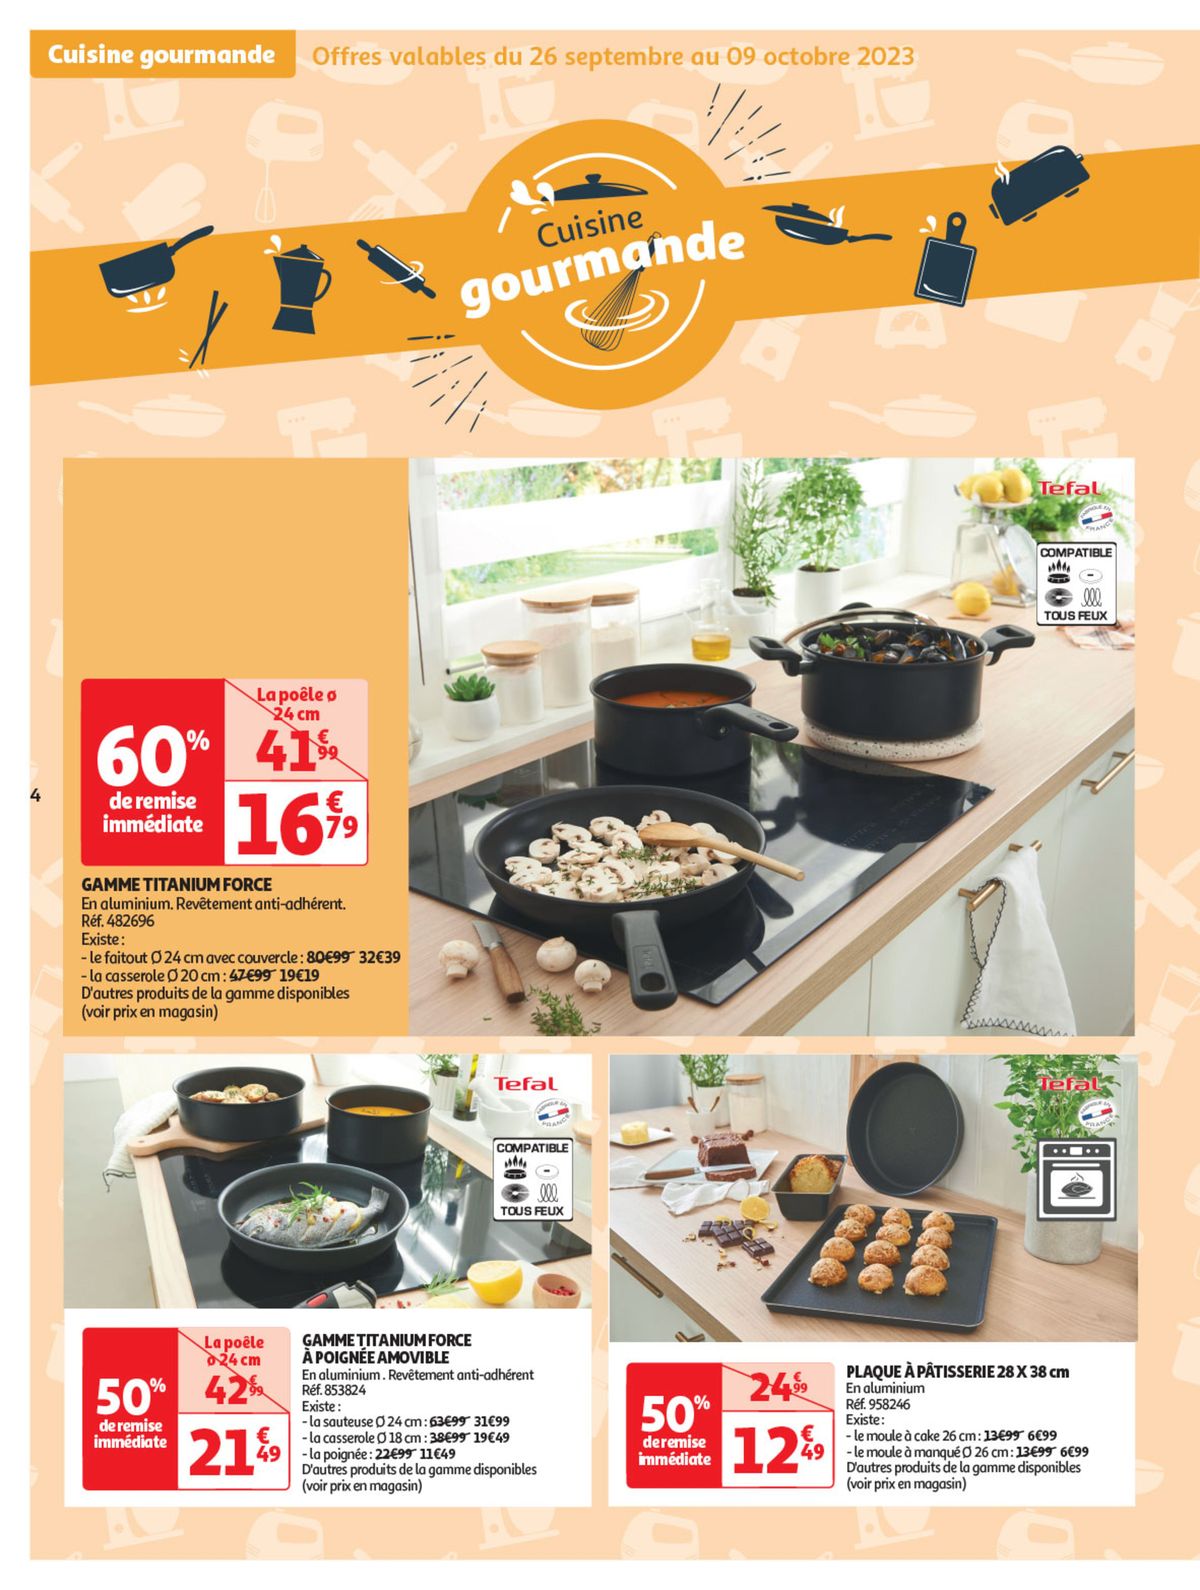 Catalogue Spécial Cuisine Gourmande, page 00004